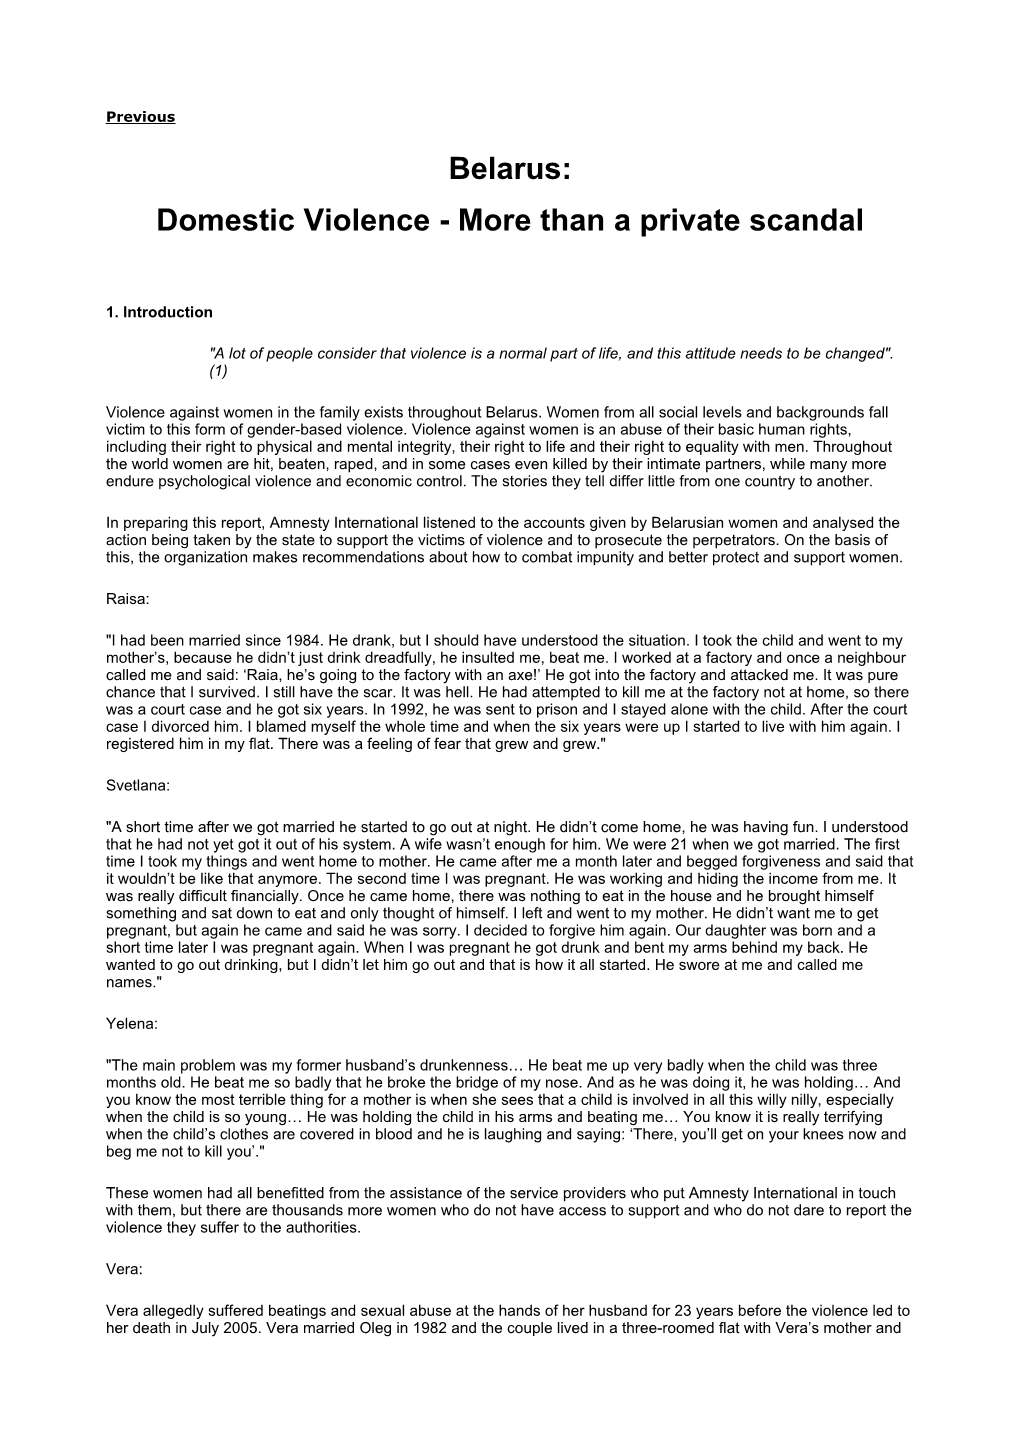 Belarus: Domestic Violence